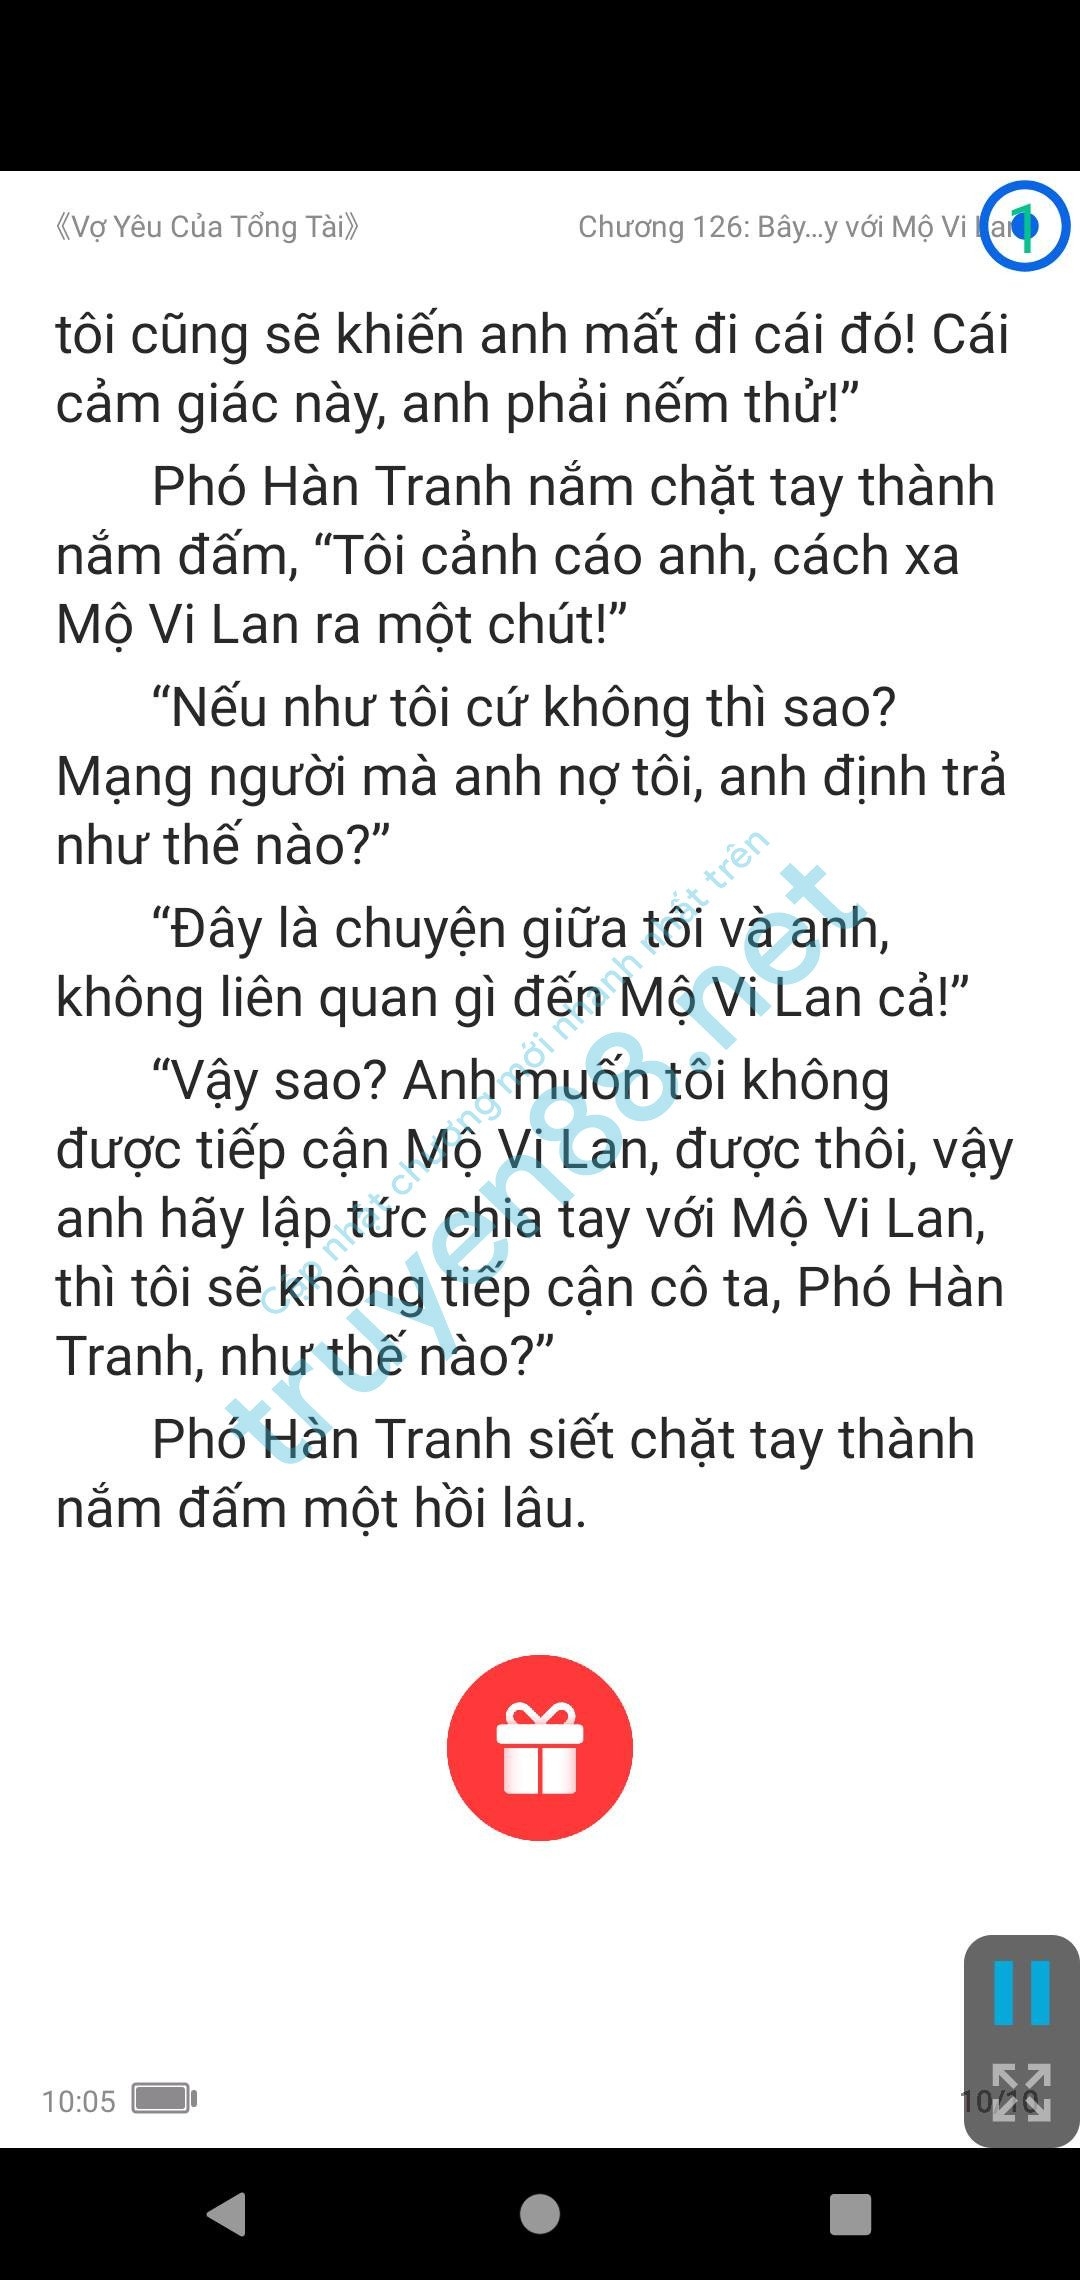 vo-yeu-cua-tong-tai-mo-vi-lan--pho-han-tranh-126-3